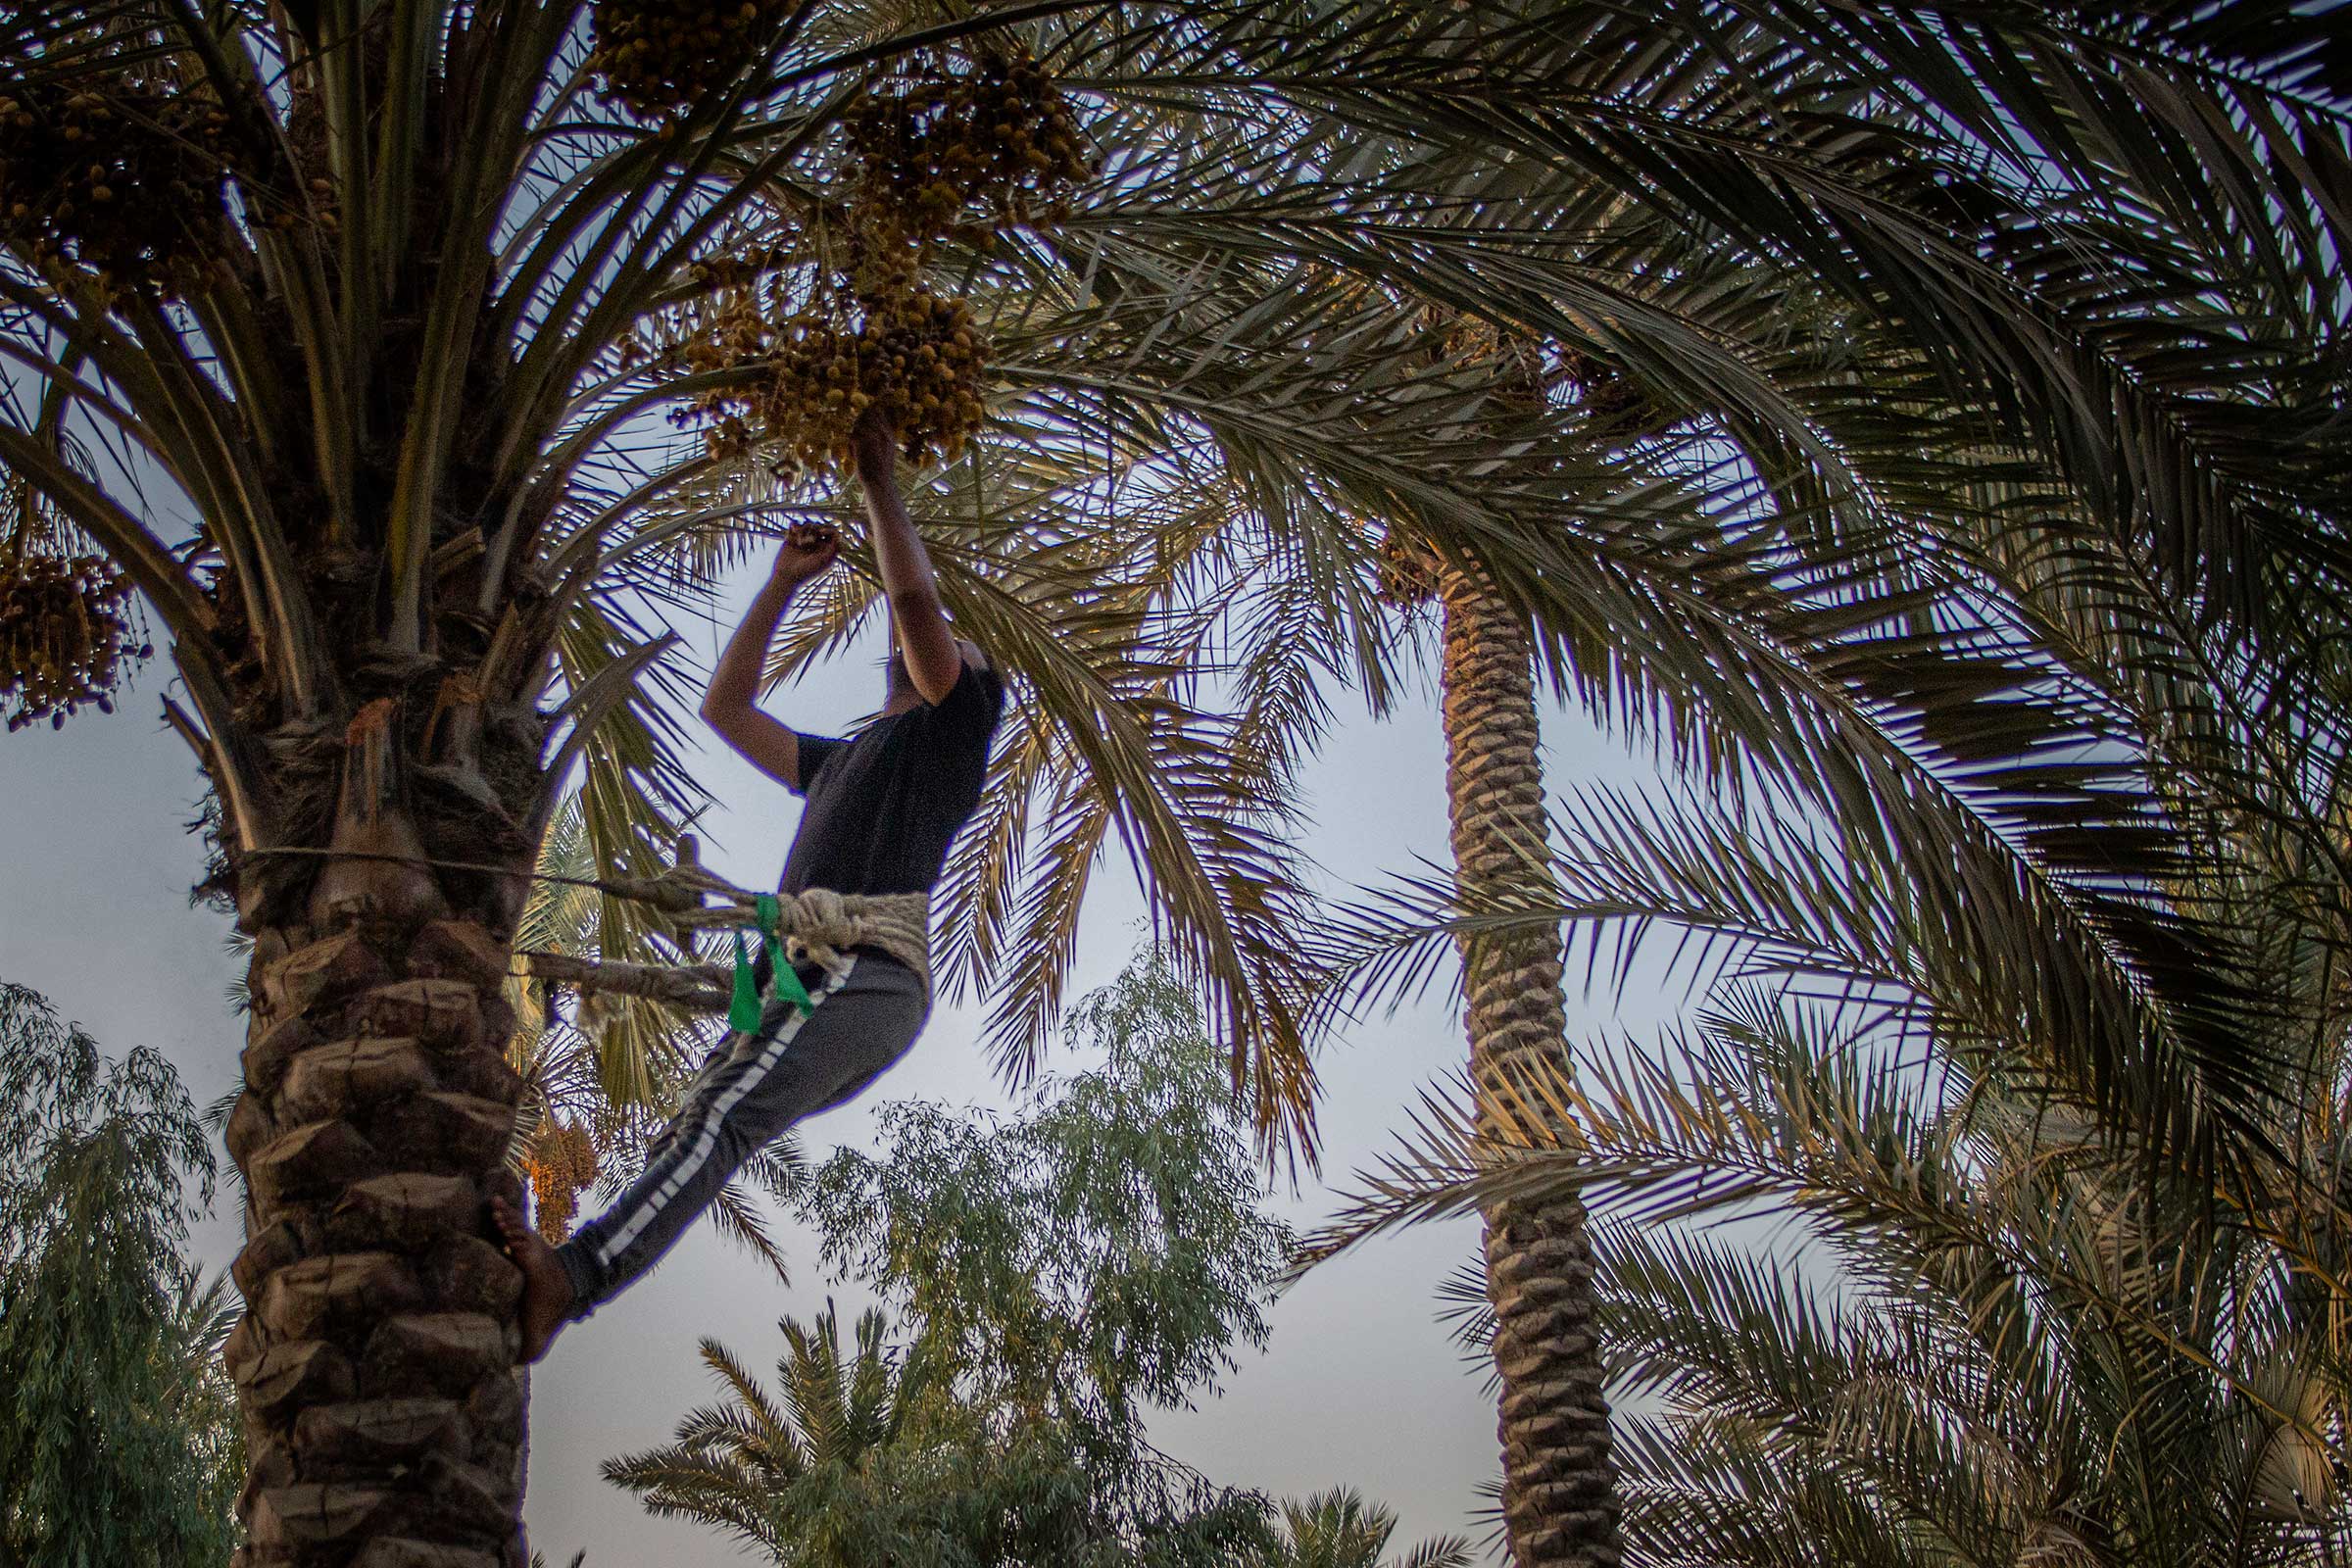 Zemen Al Shammari harvests dates during sunset. (Sam Kimball)